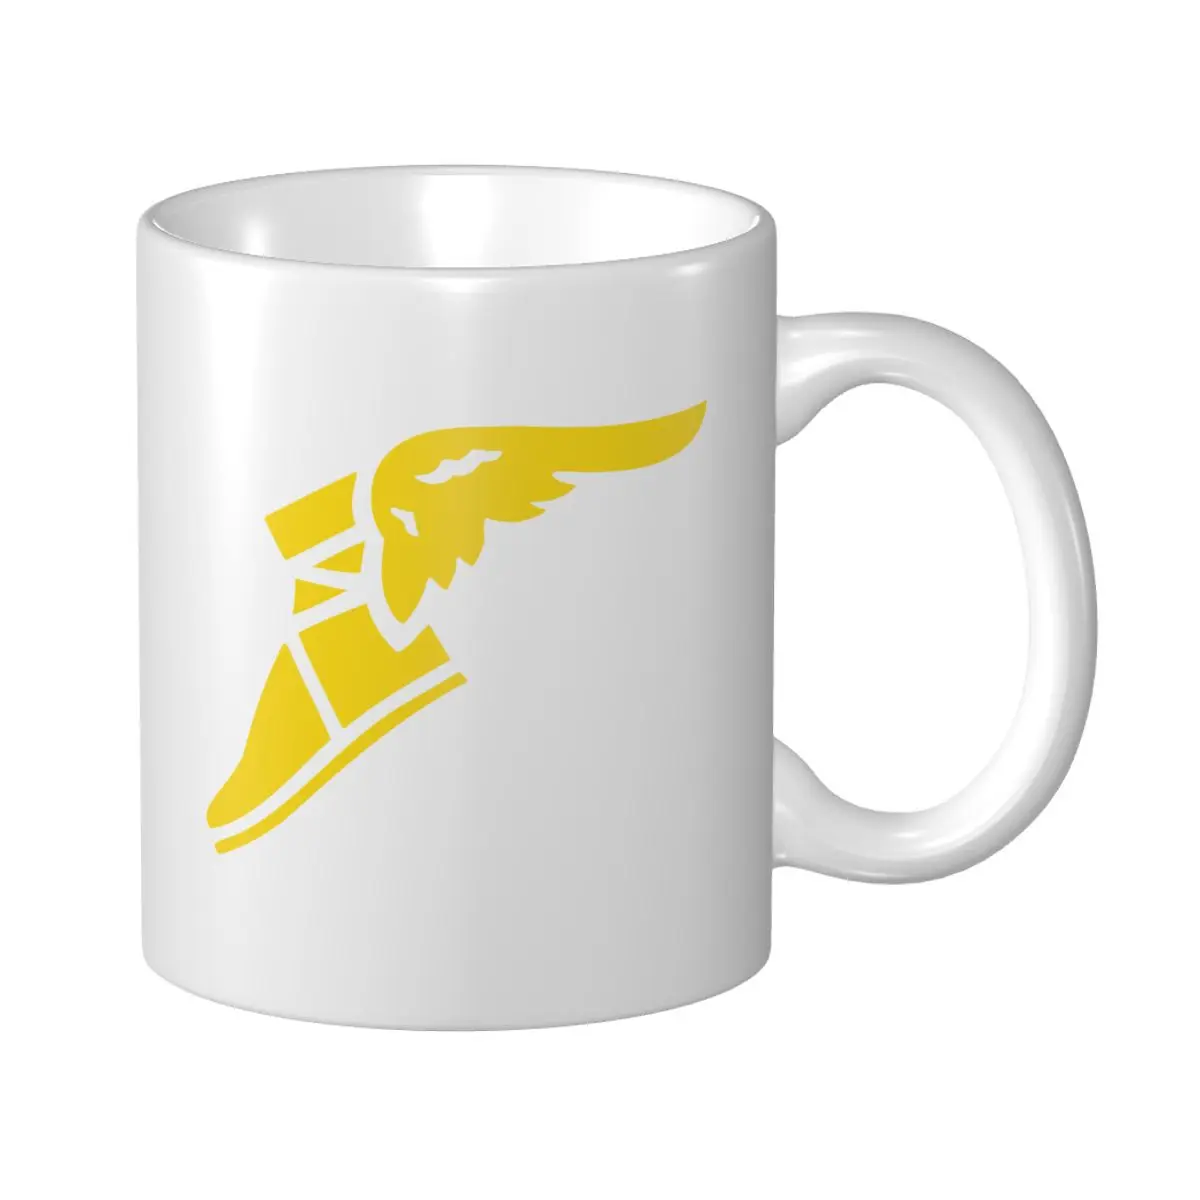 

Goodyear Coffe Mug Solid color Mugs Personality Ceramic Mugs Eco Friendly Tea Cup 330ml (11oz)